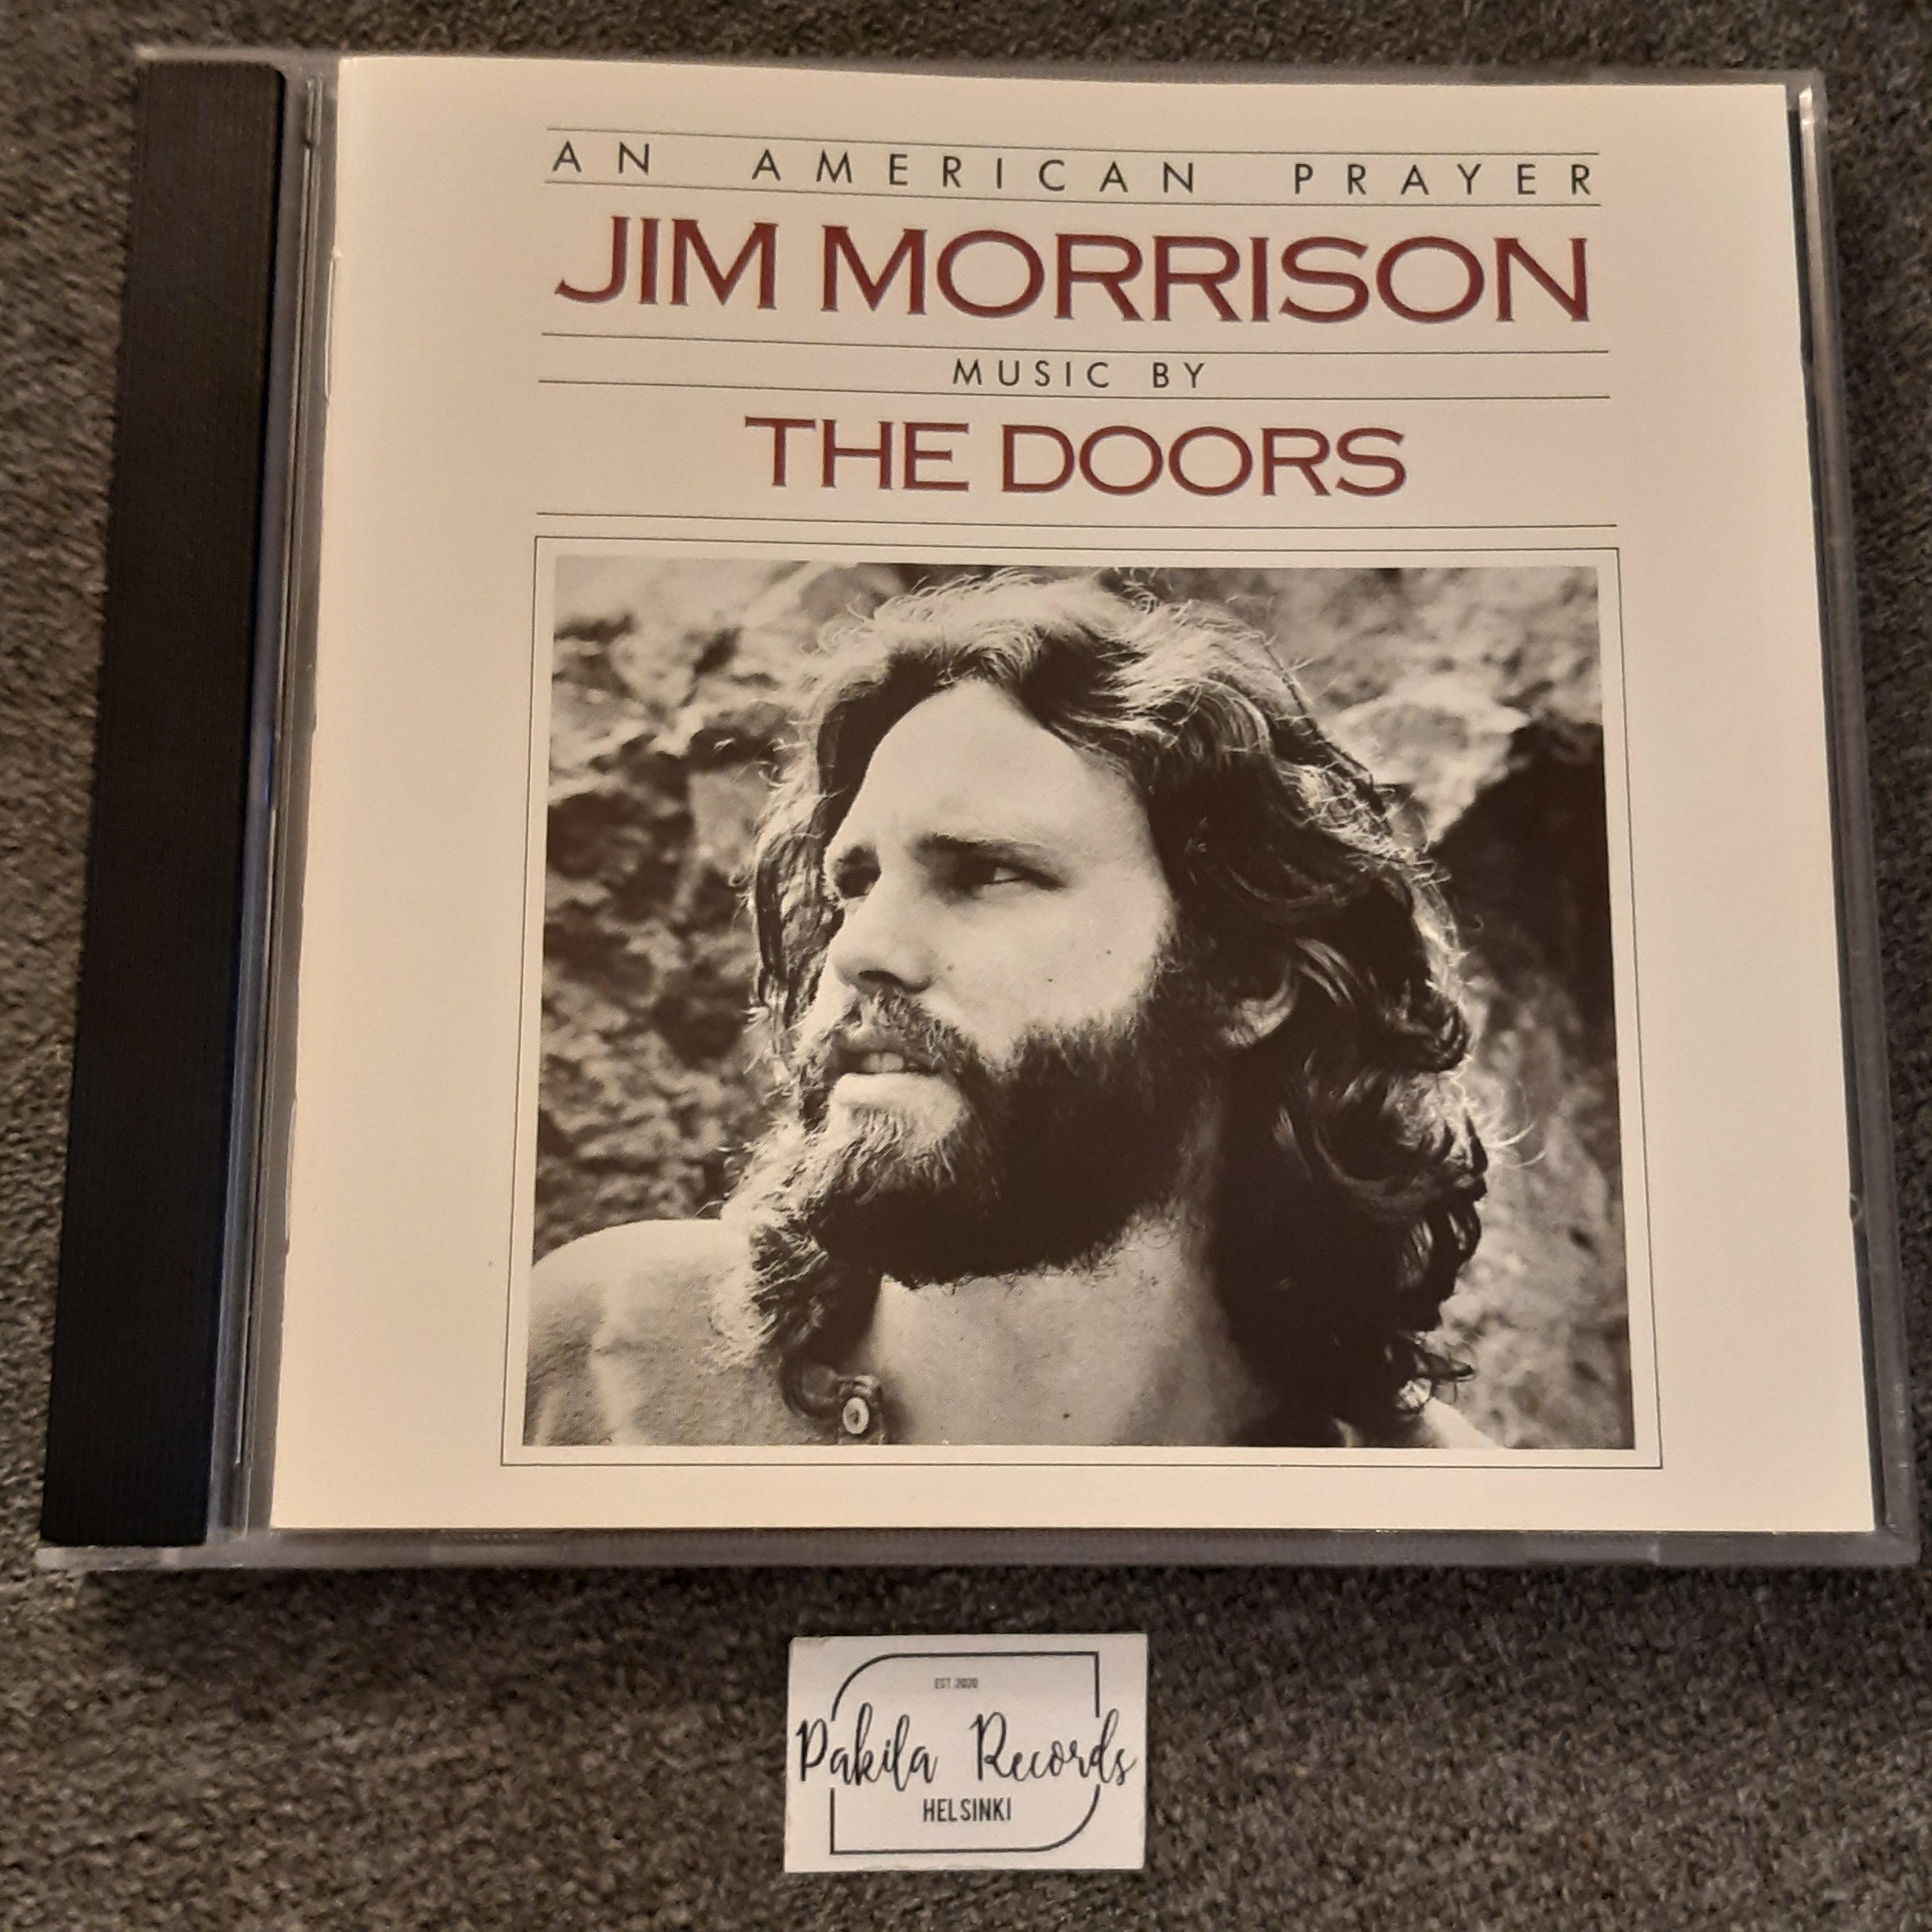 Jim Morrison Music By The Doors - An American Prayer - CD (käytetty)